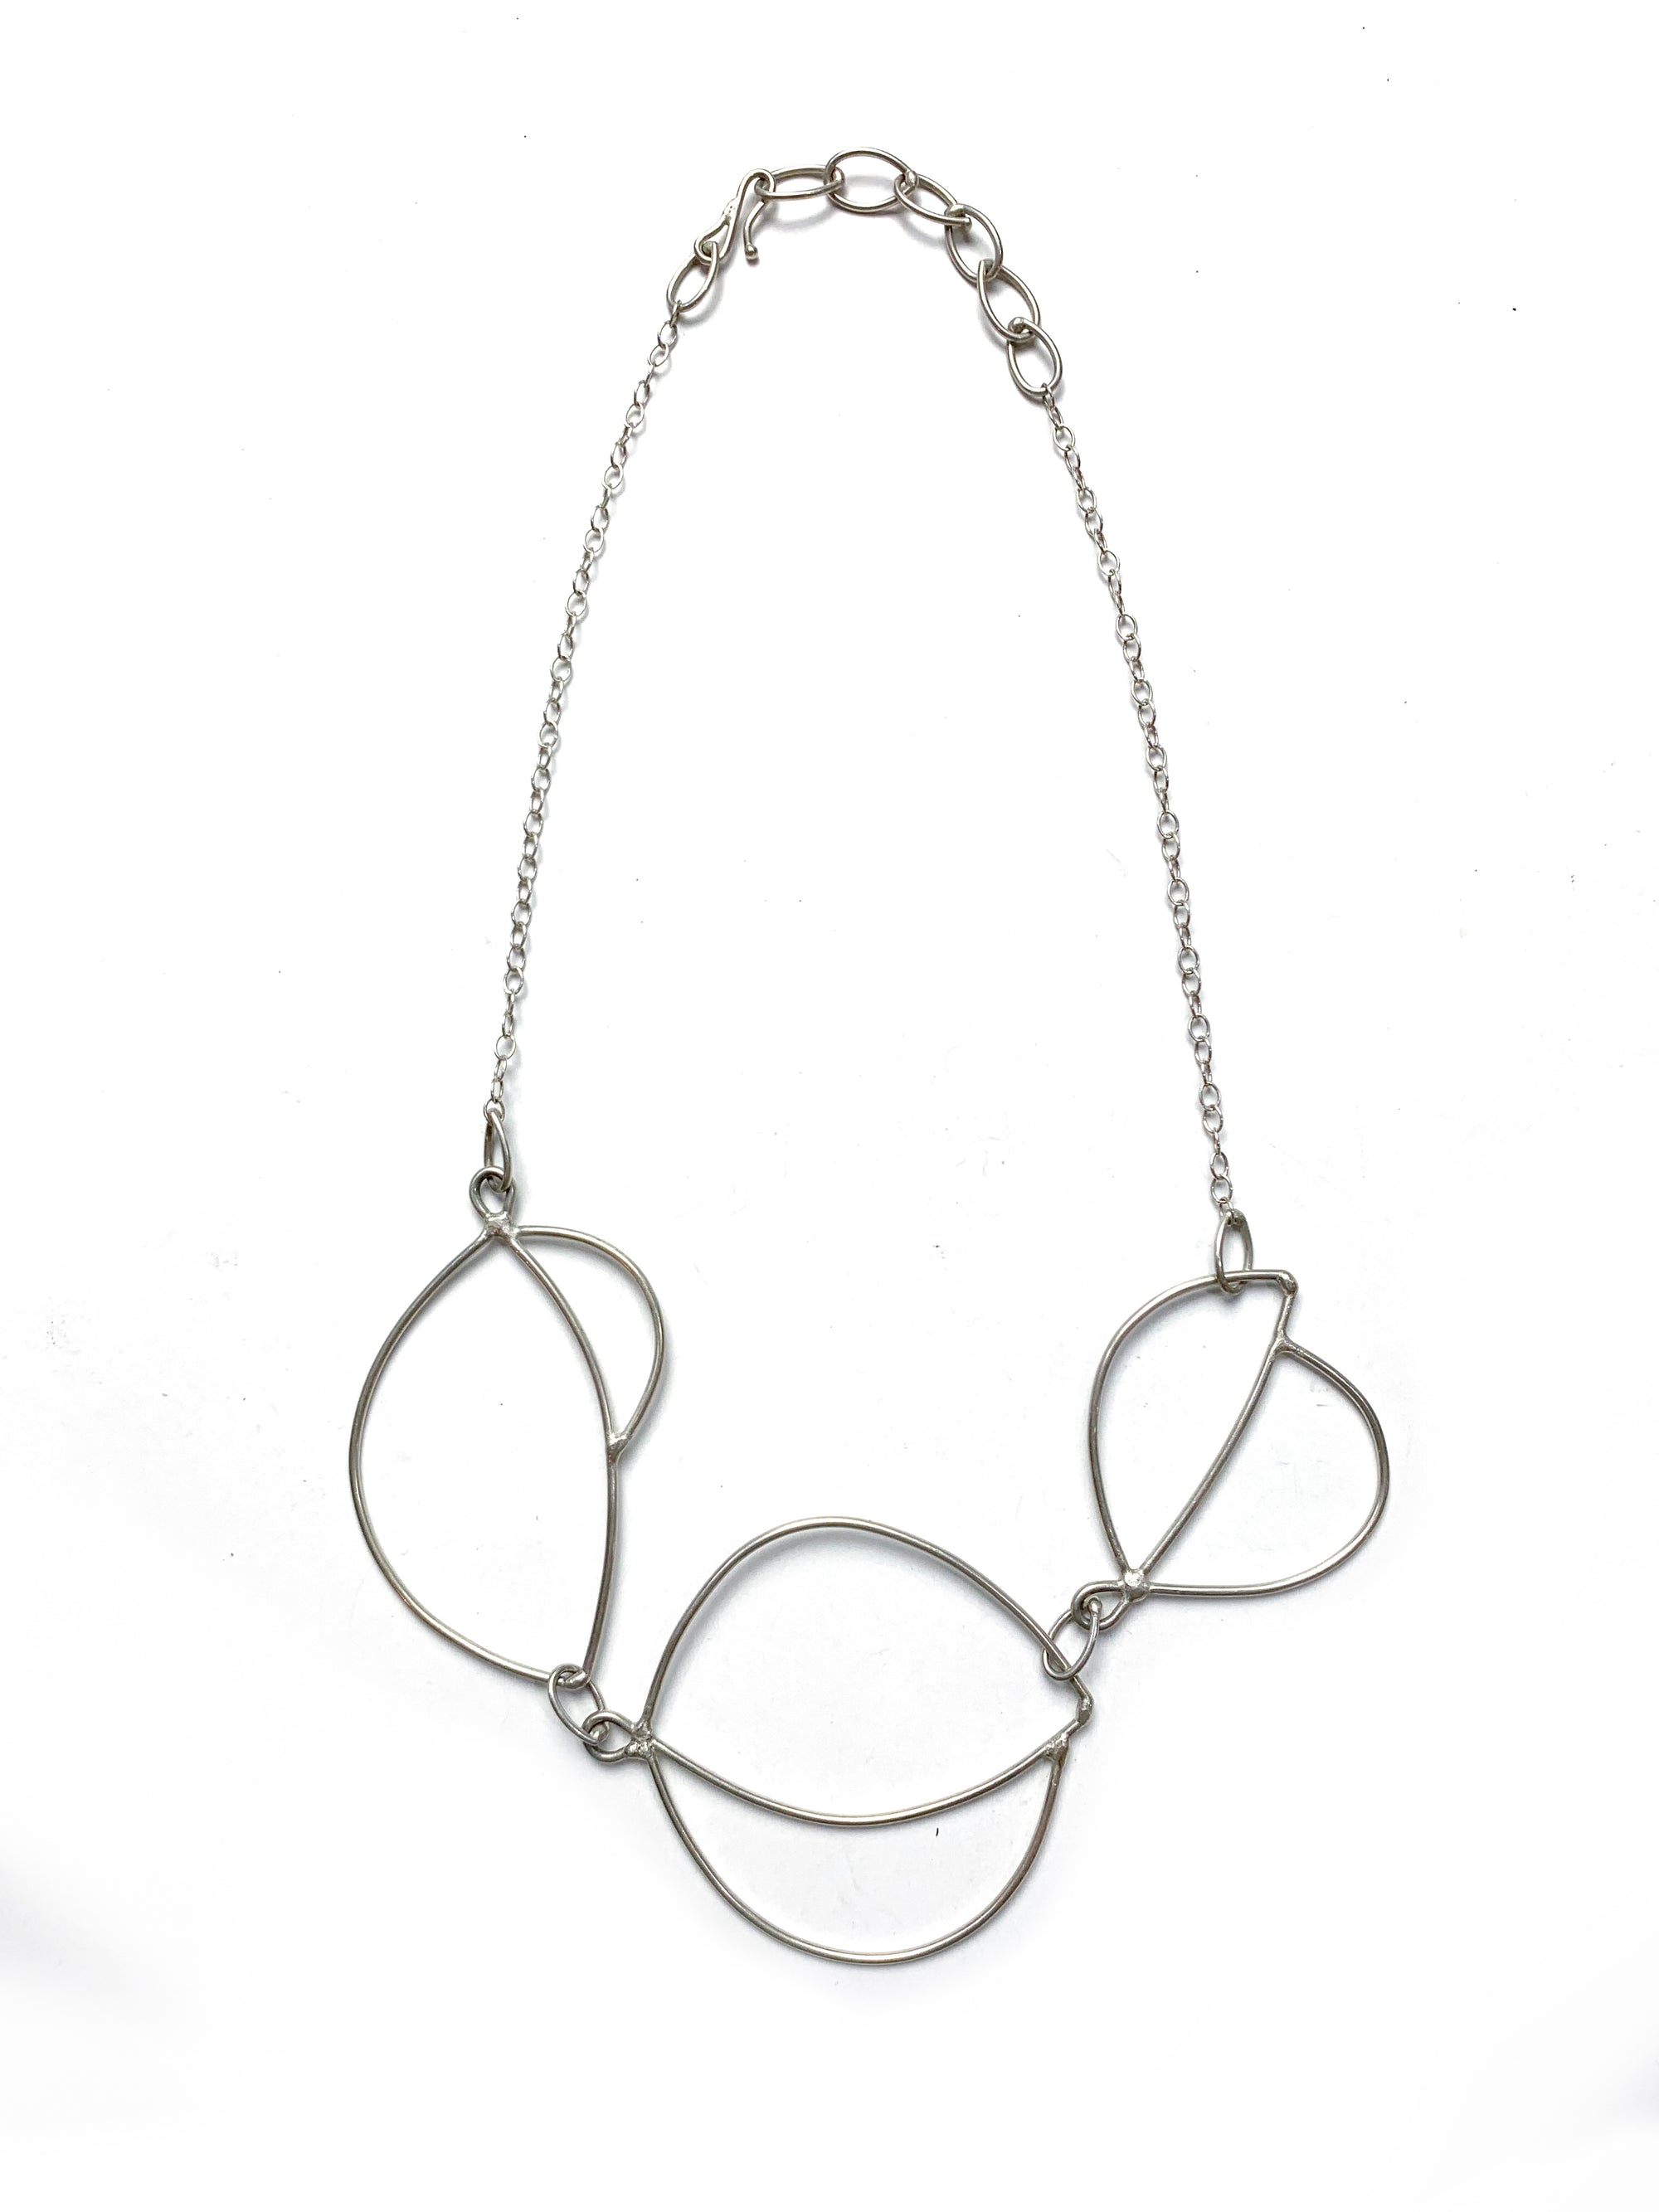 Embiller Necklace in silver - sample sale